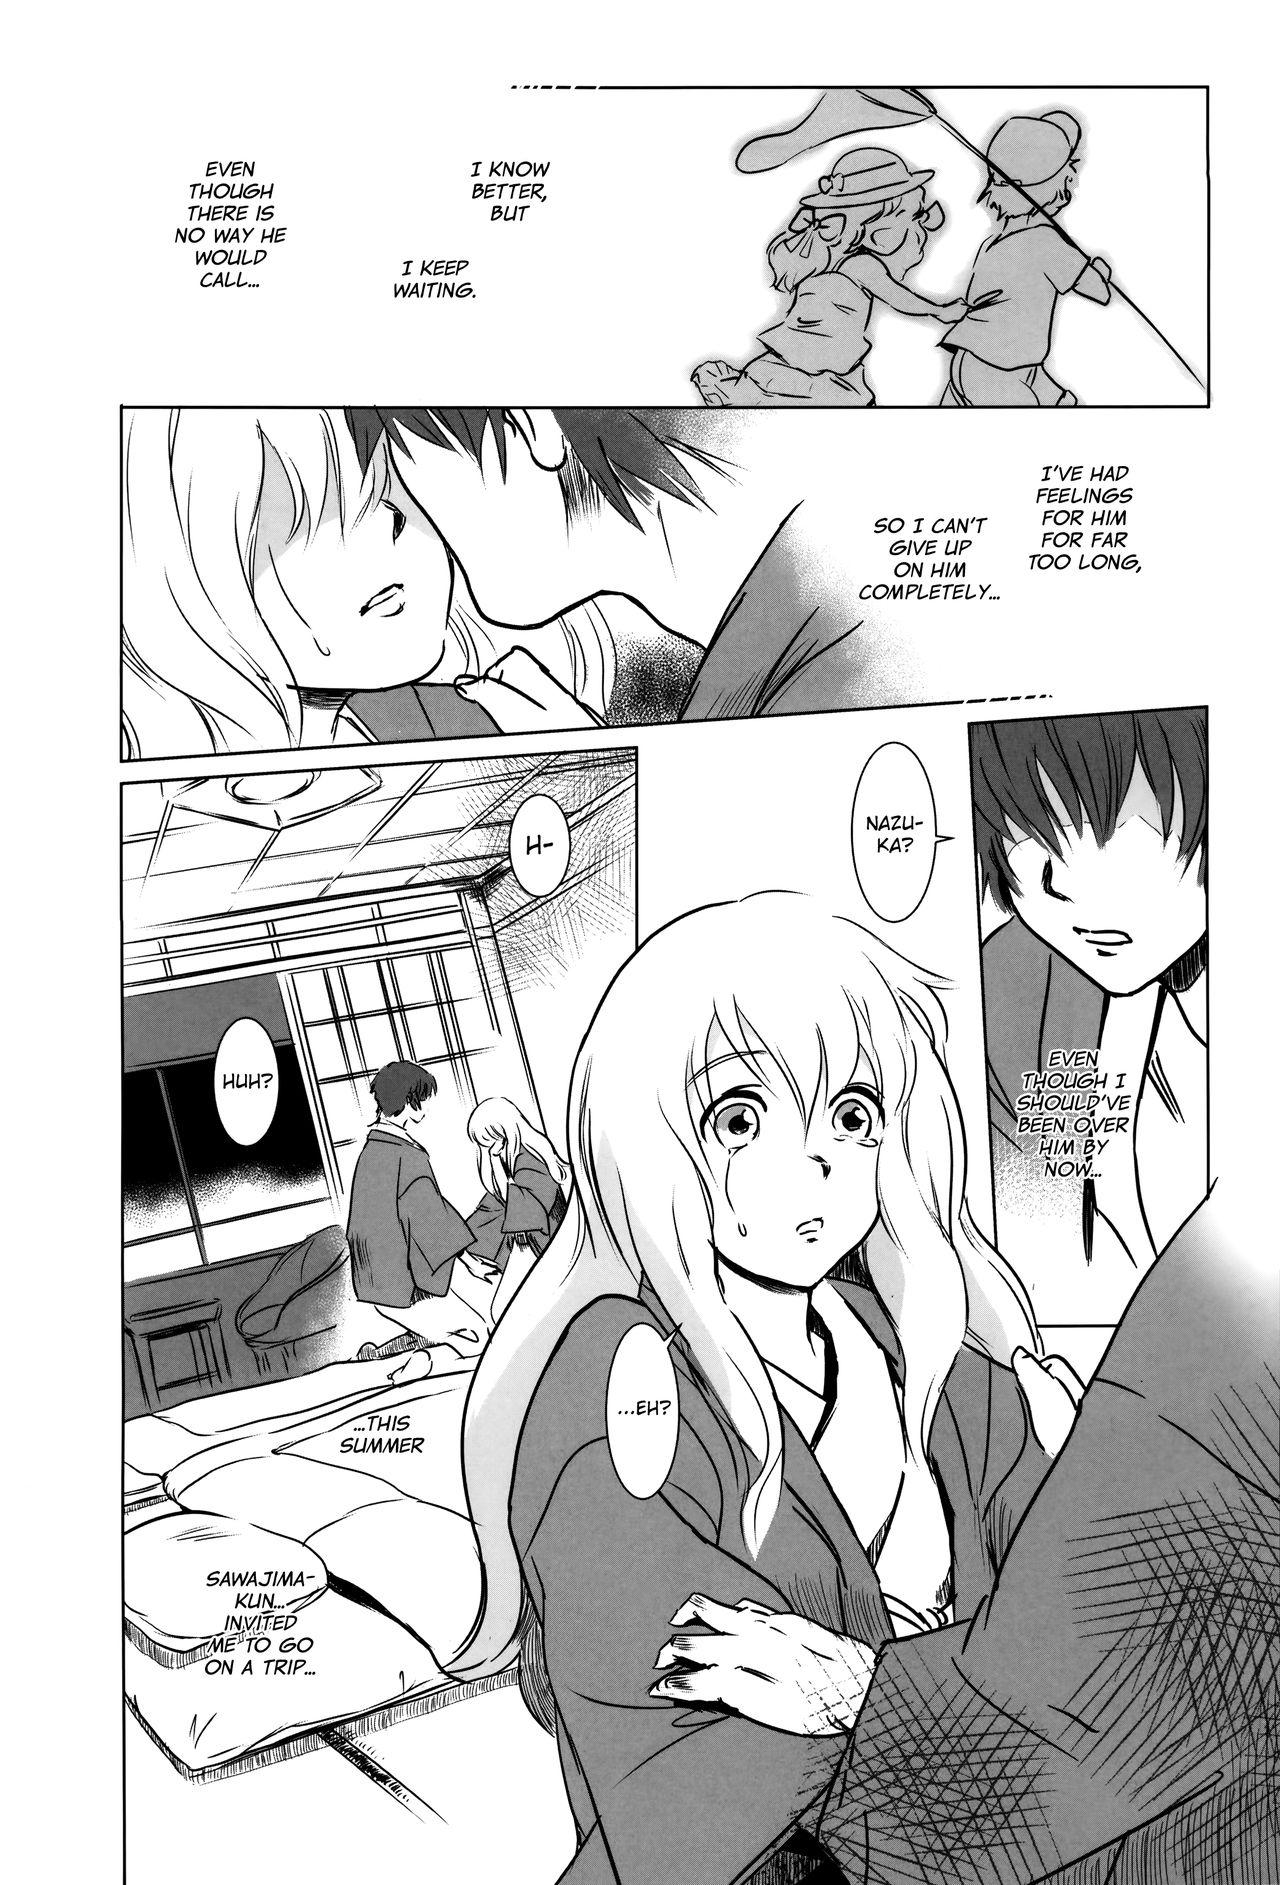 Massage Creep Story of the 'N' Situation - Situation#2 Kokoro Utsuri Crossdresser - Page 3